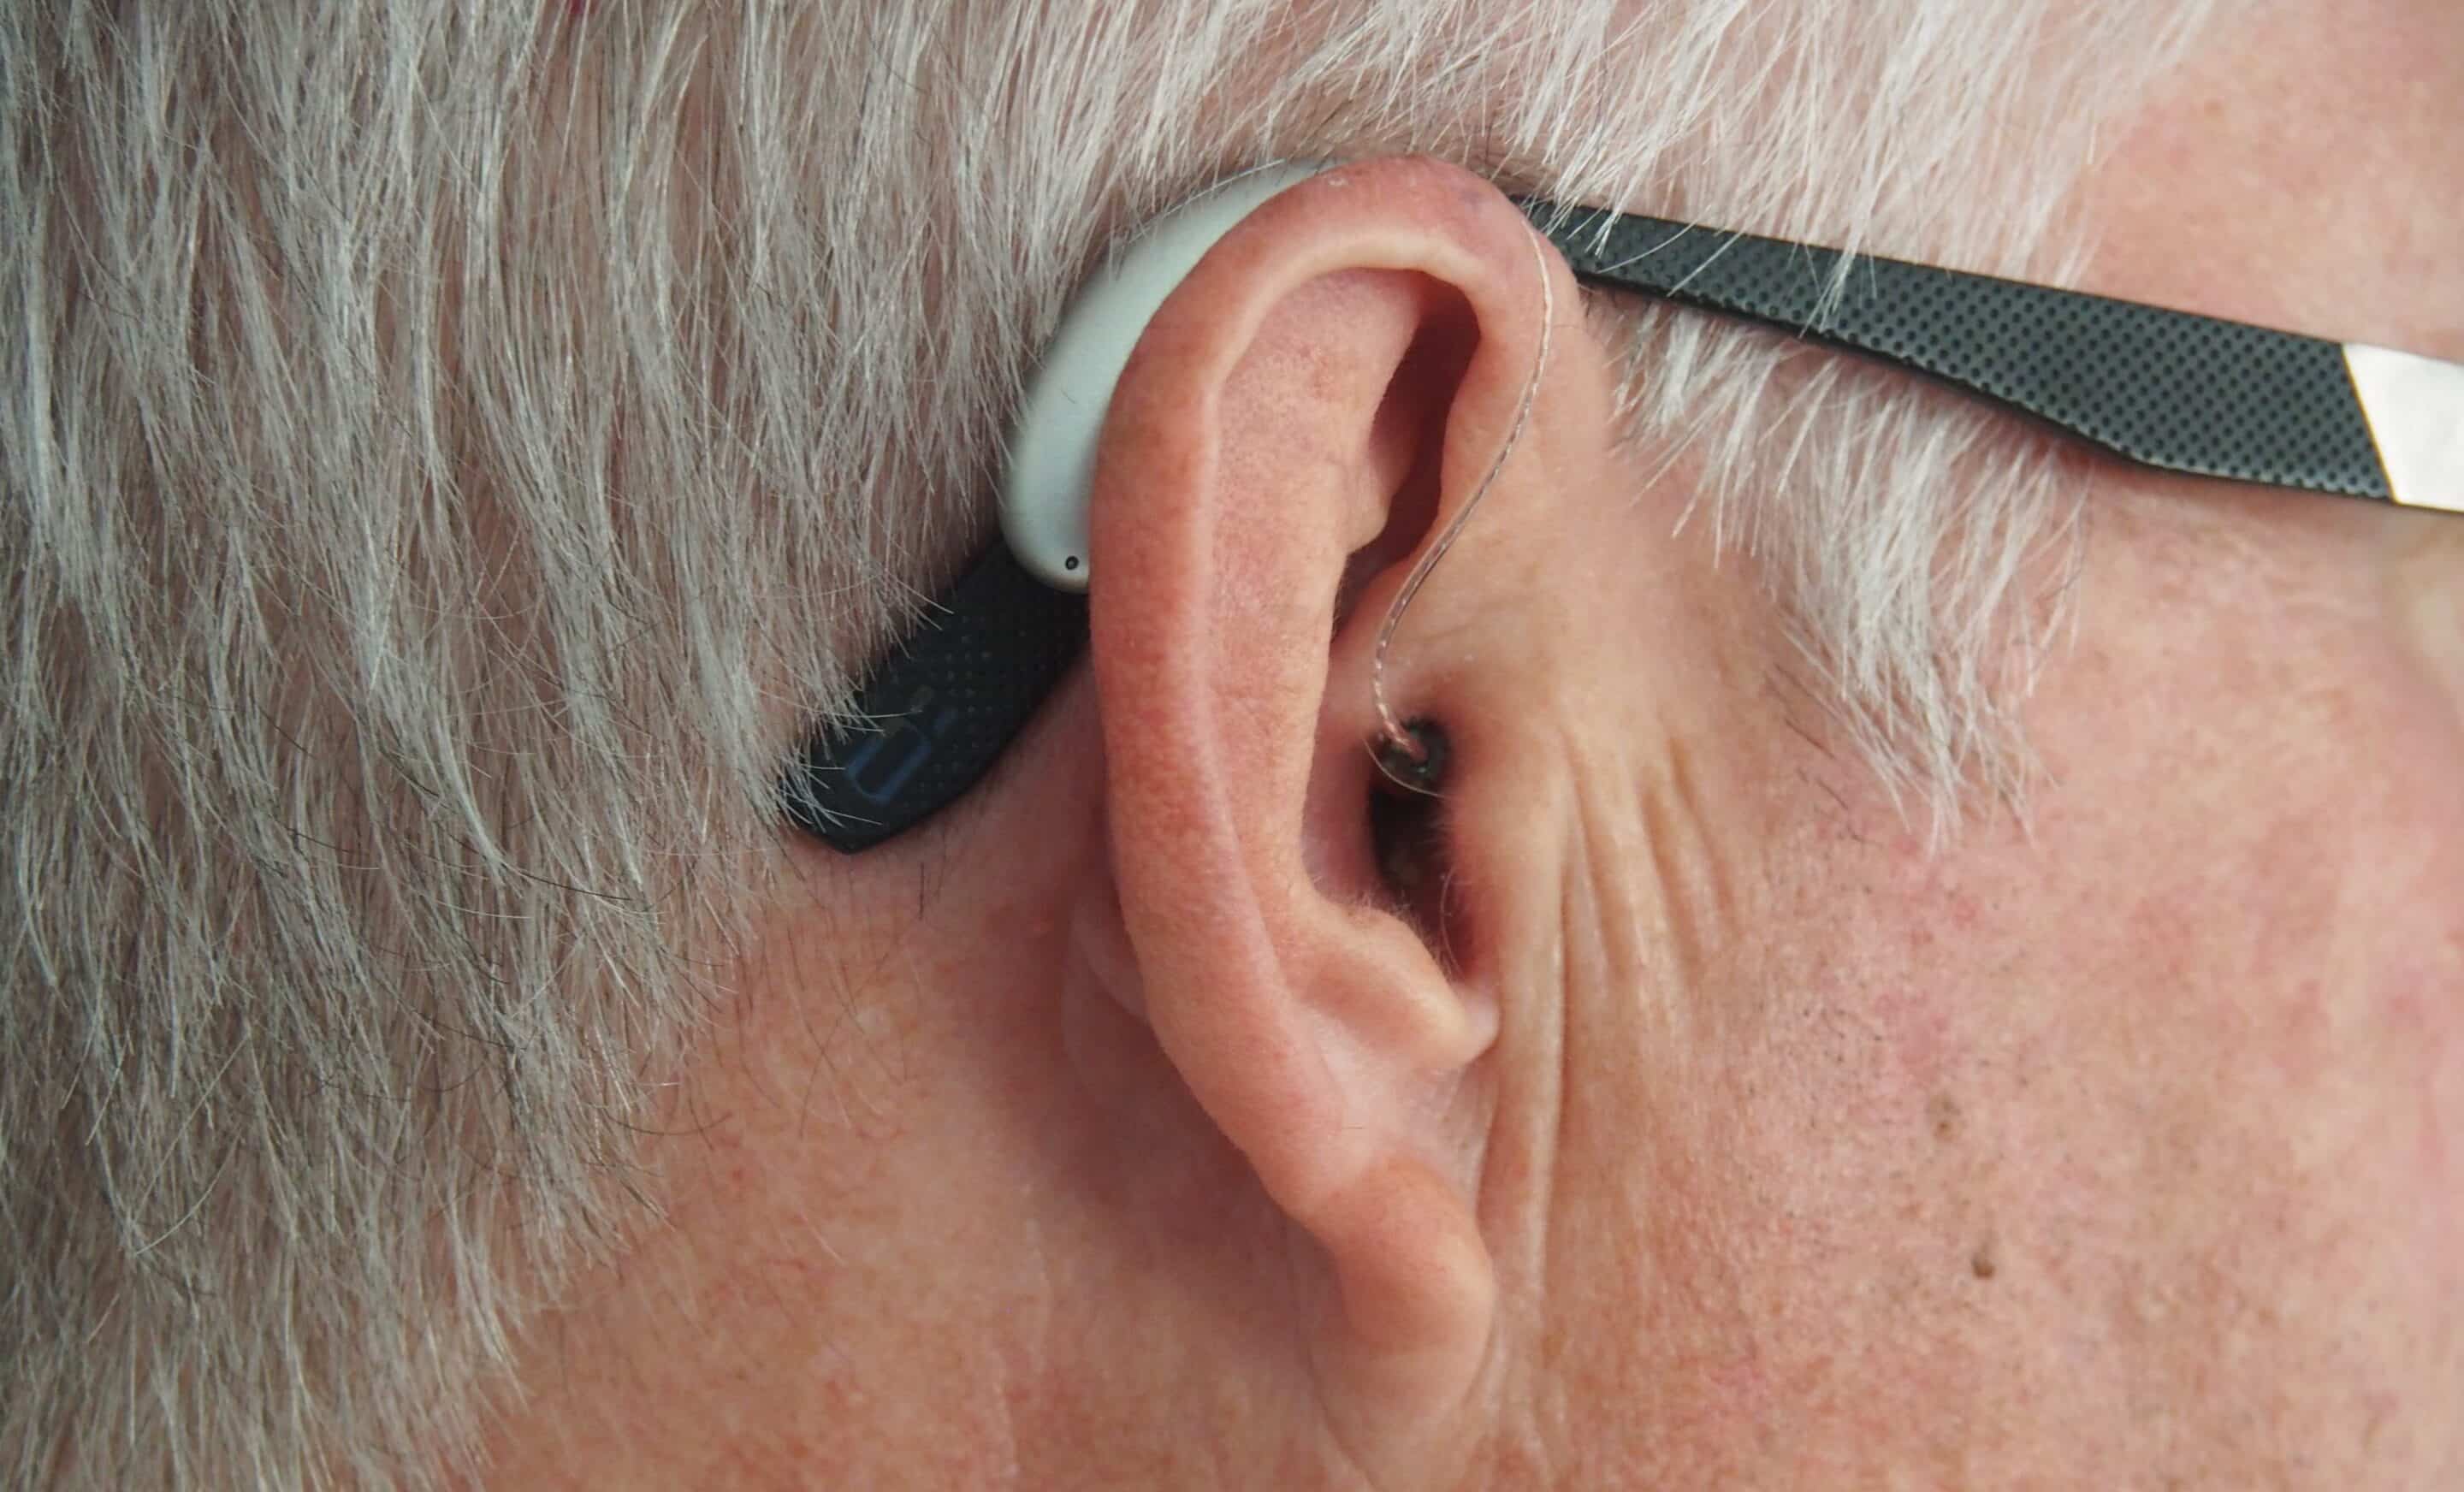 persona con un dispositivo auditivo